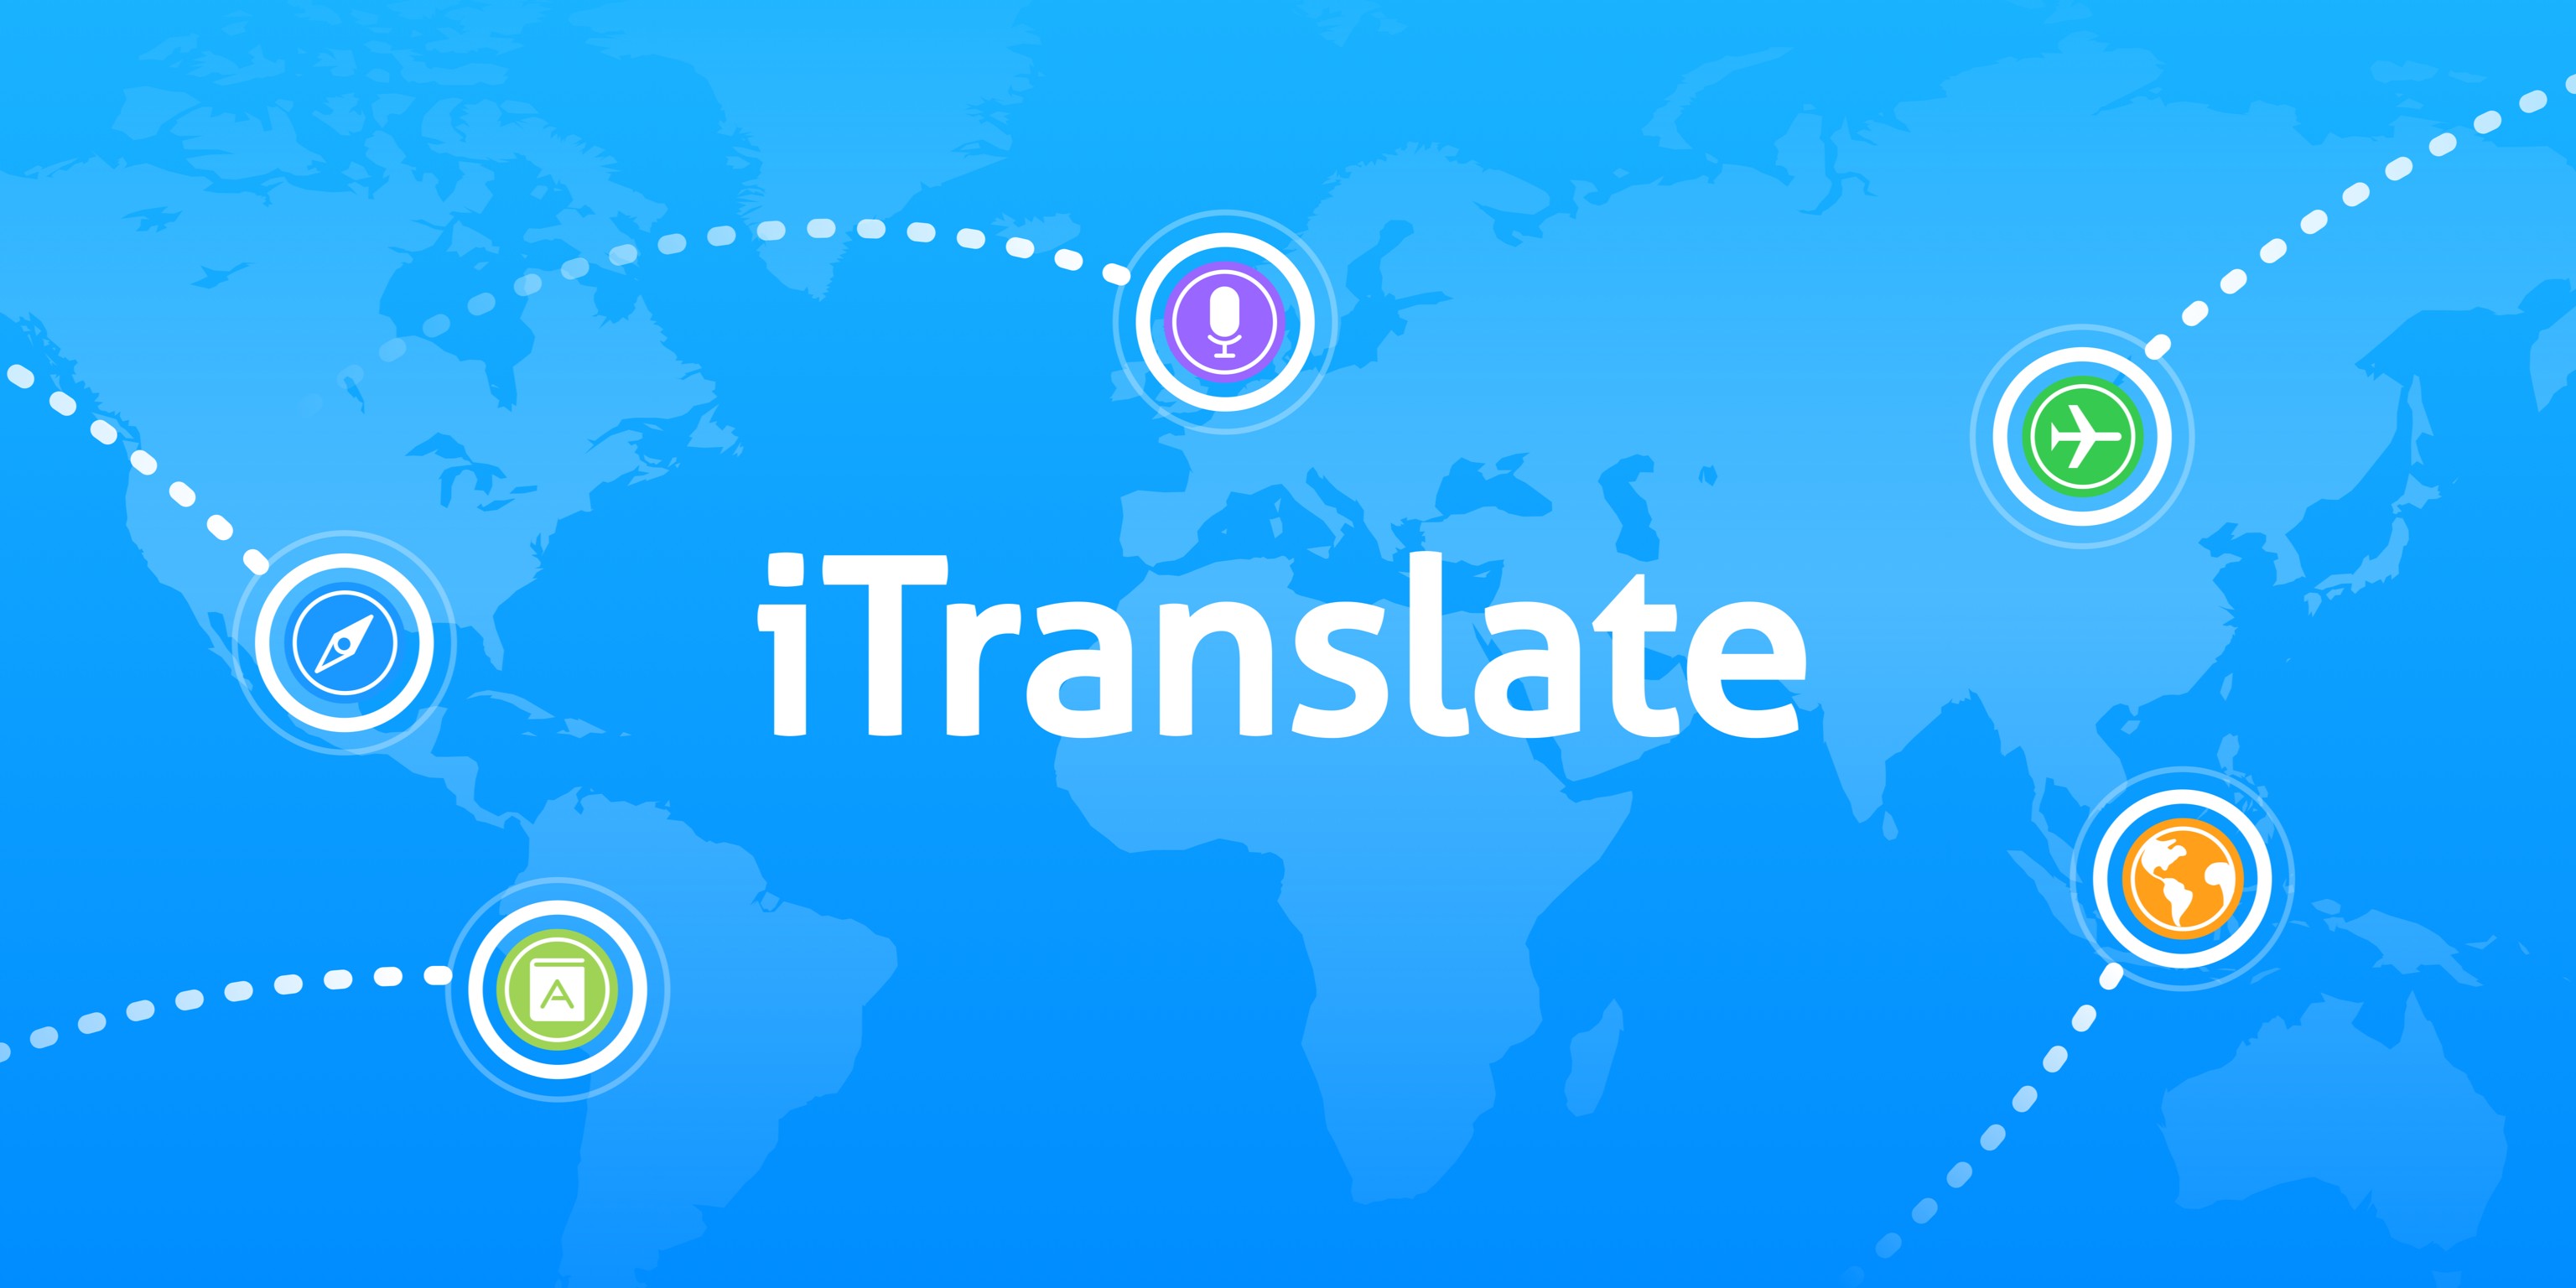 iTranslate | LinkedIn